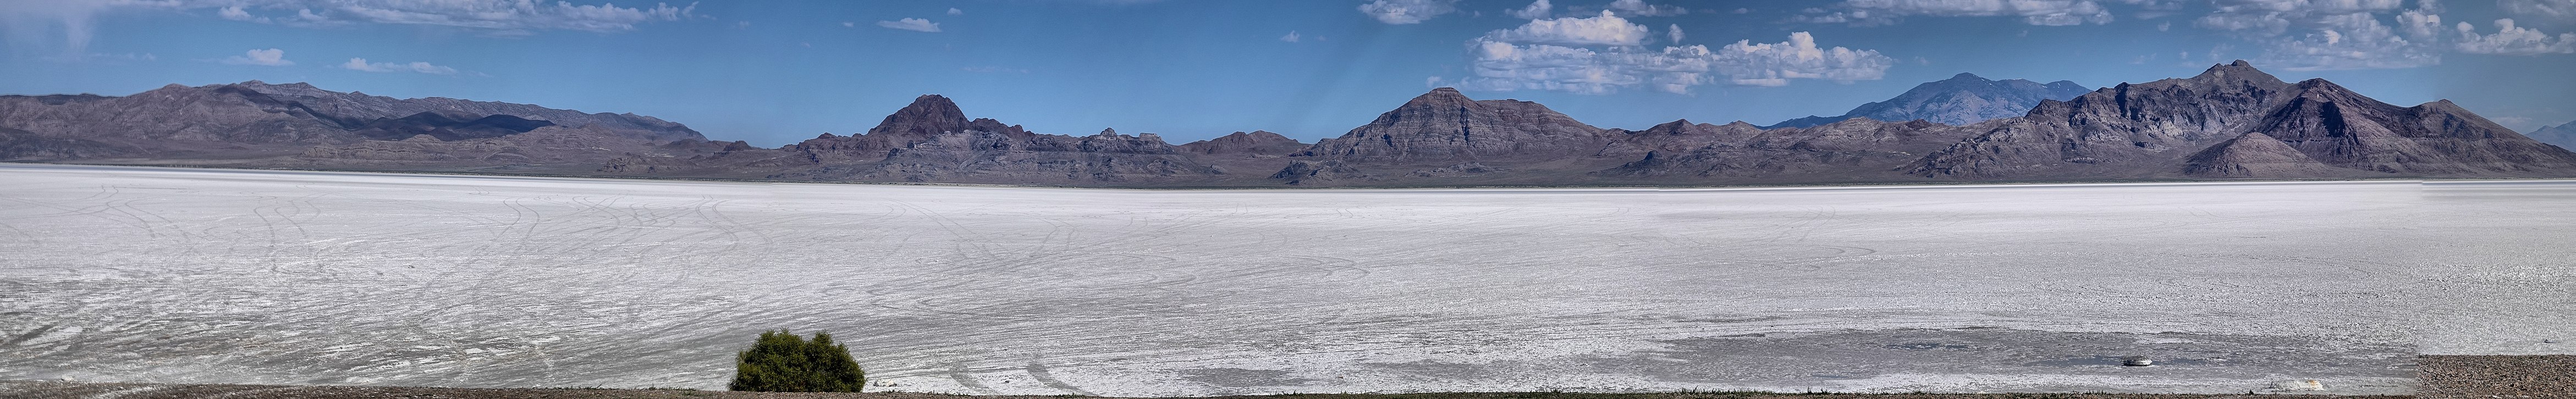 2019 Nevada Salt Flats RX10 IV RX406503_dphdr-6 images.jpg